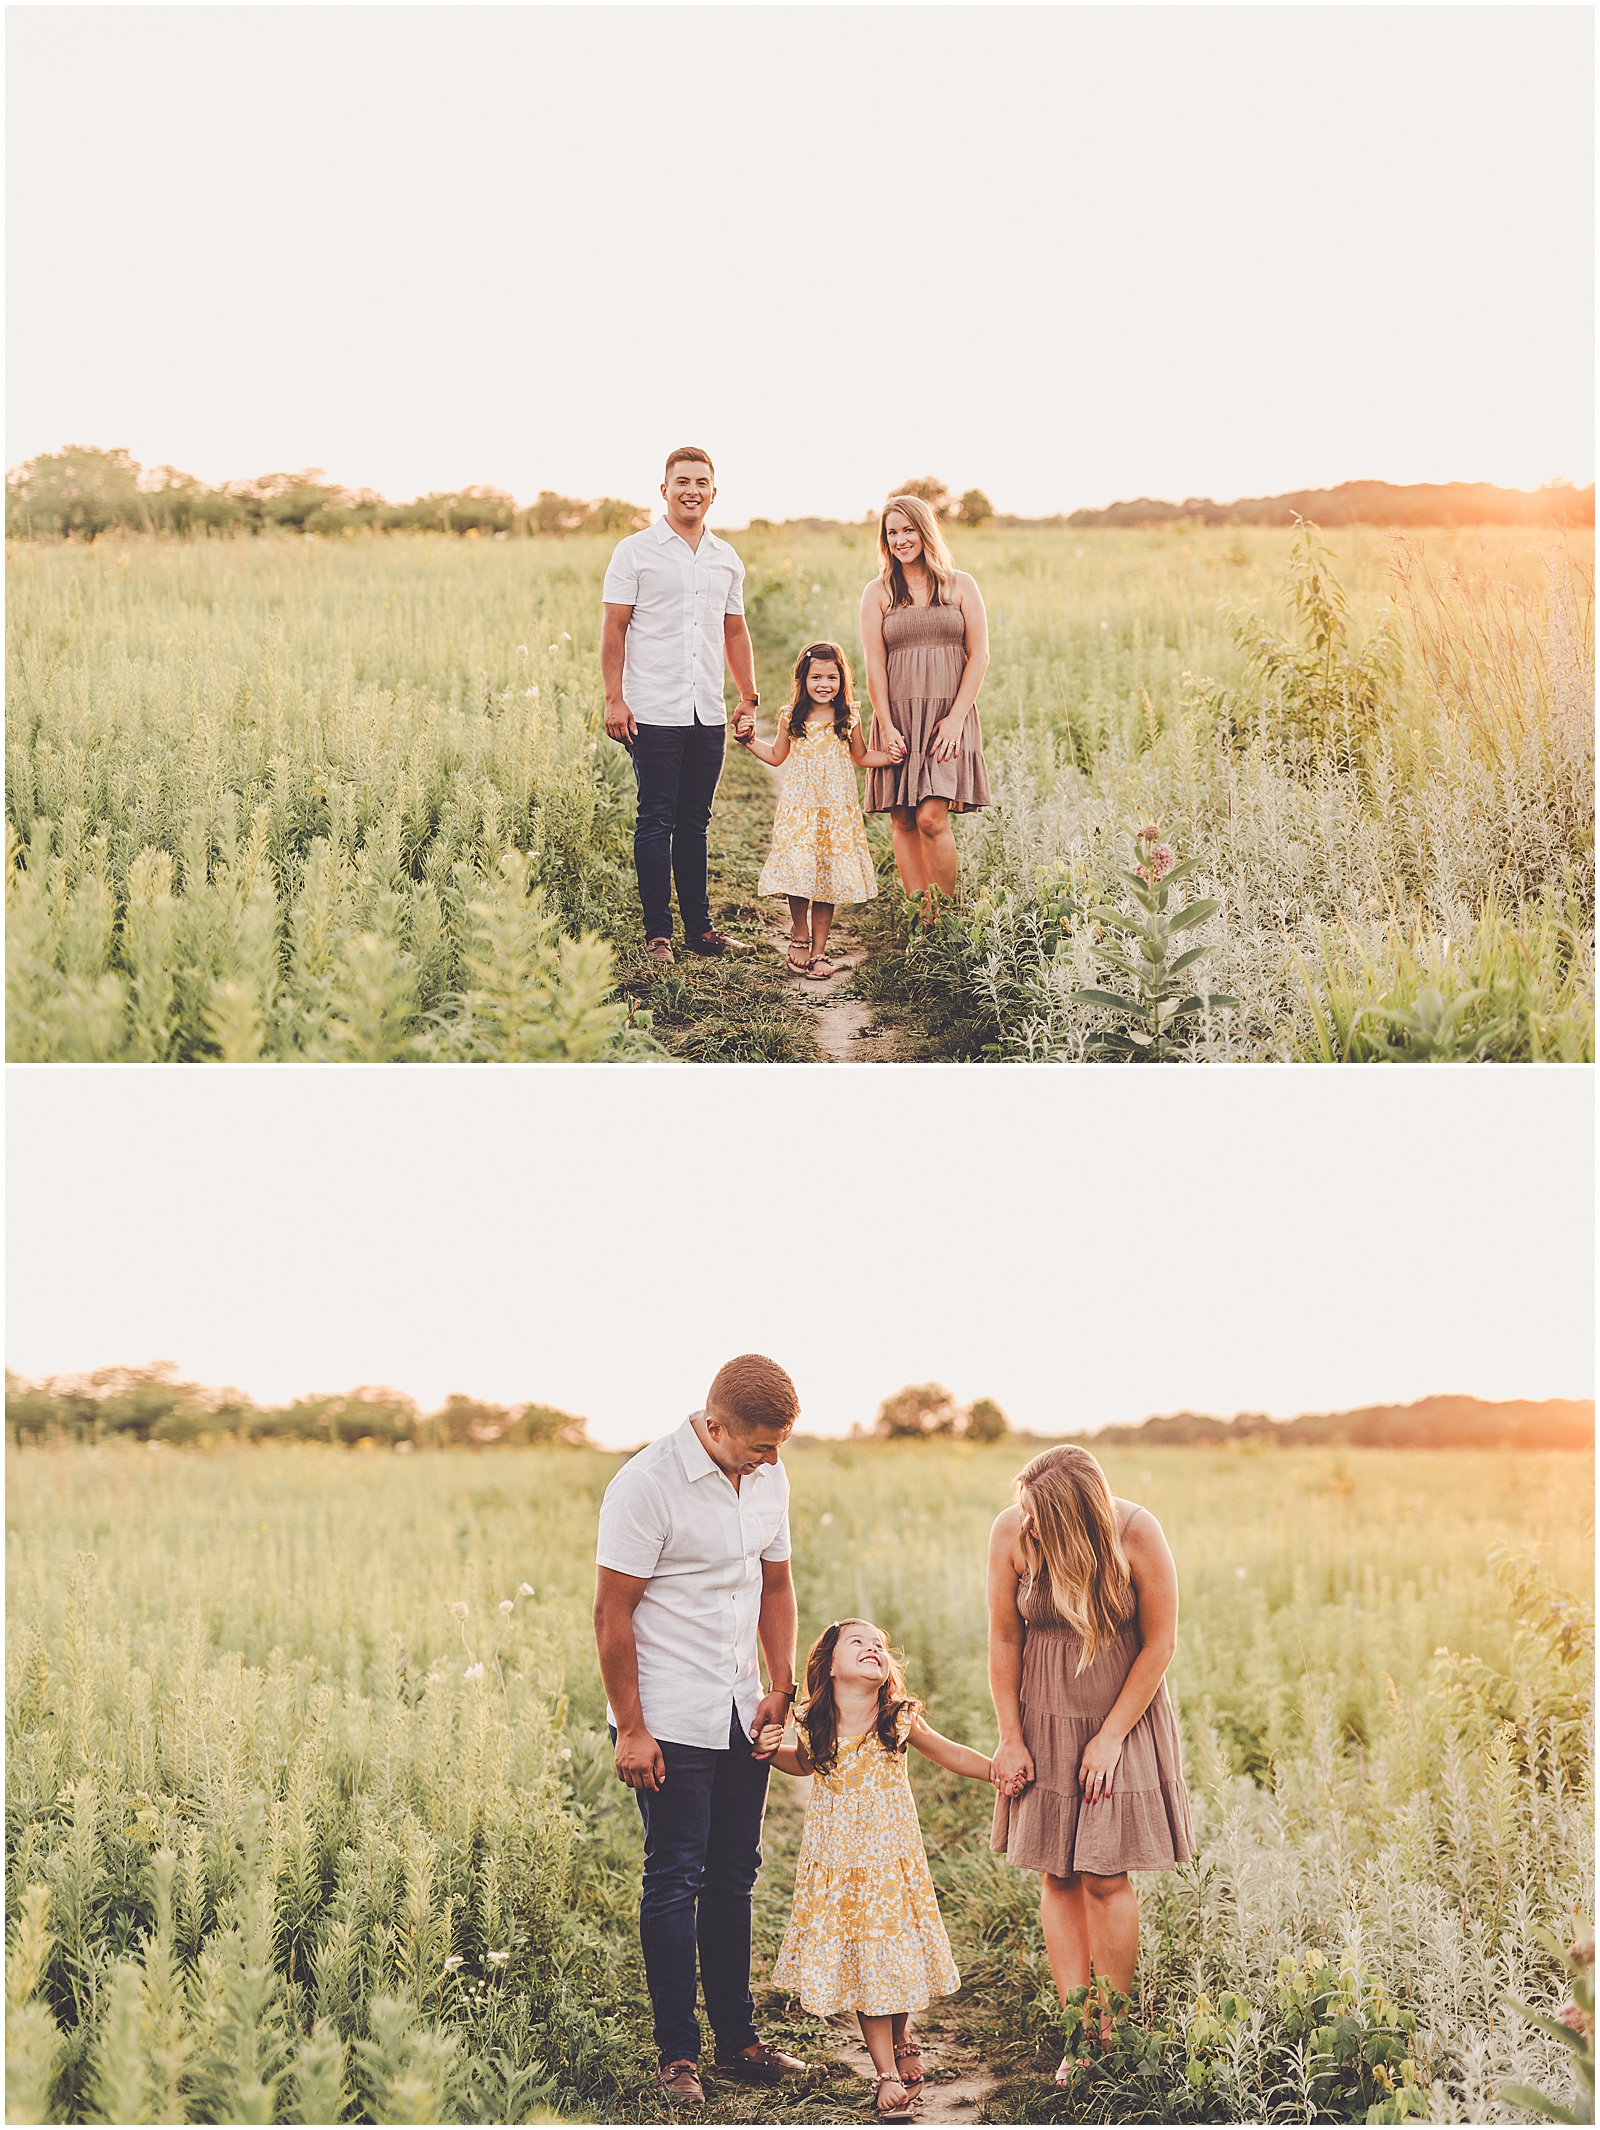 Summer sunset family session with the Diaz family and Bourbonnais family photographer Kara Evans Photographer.